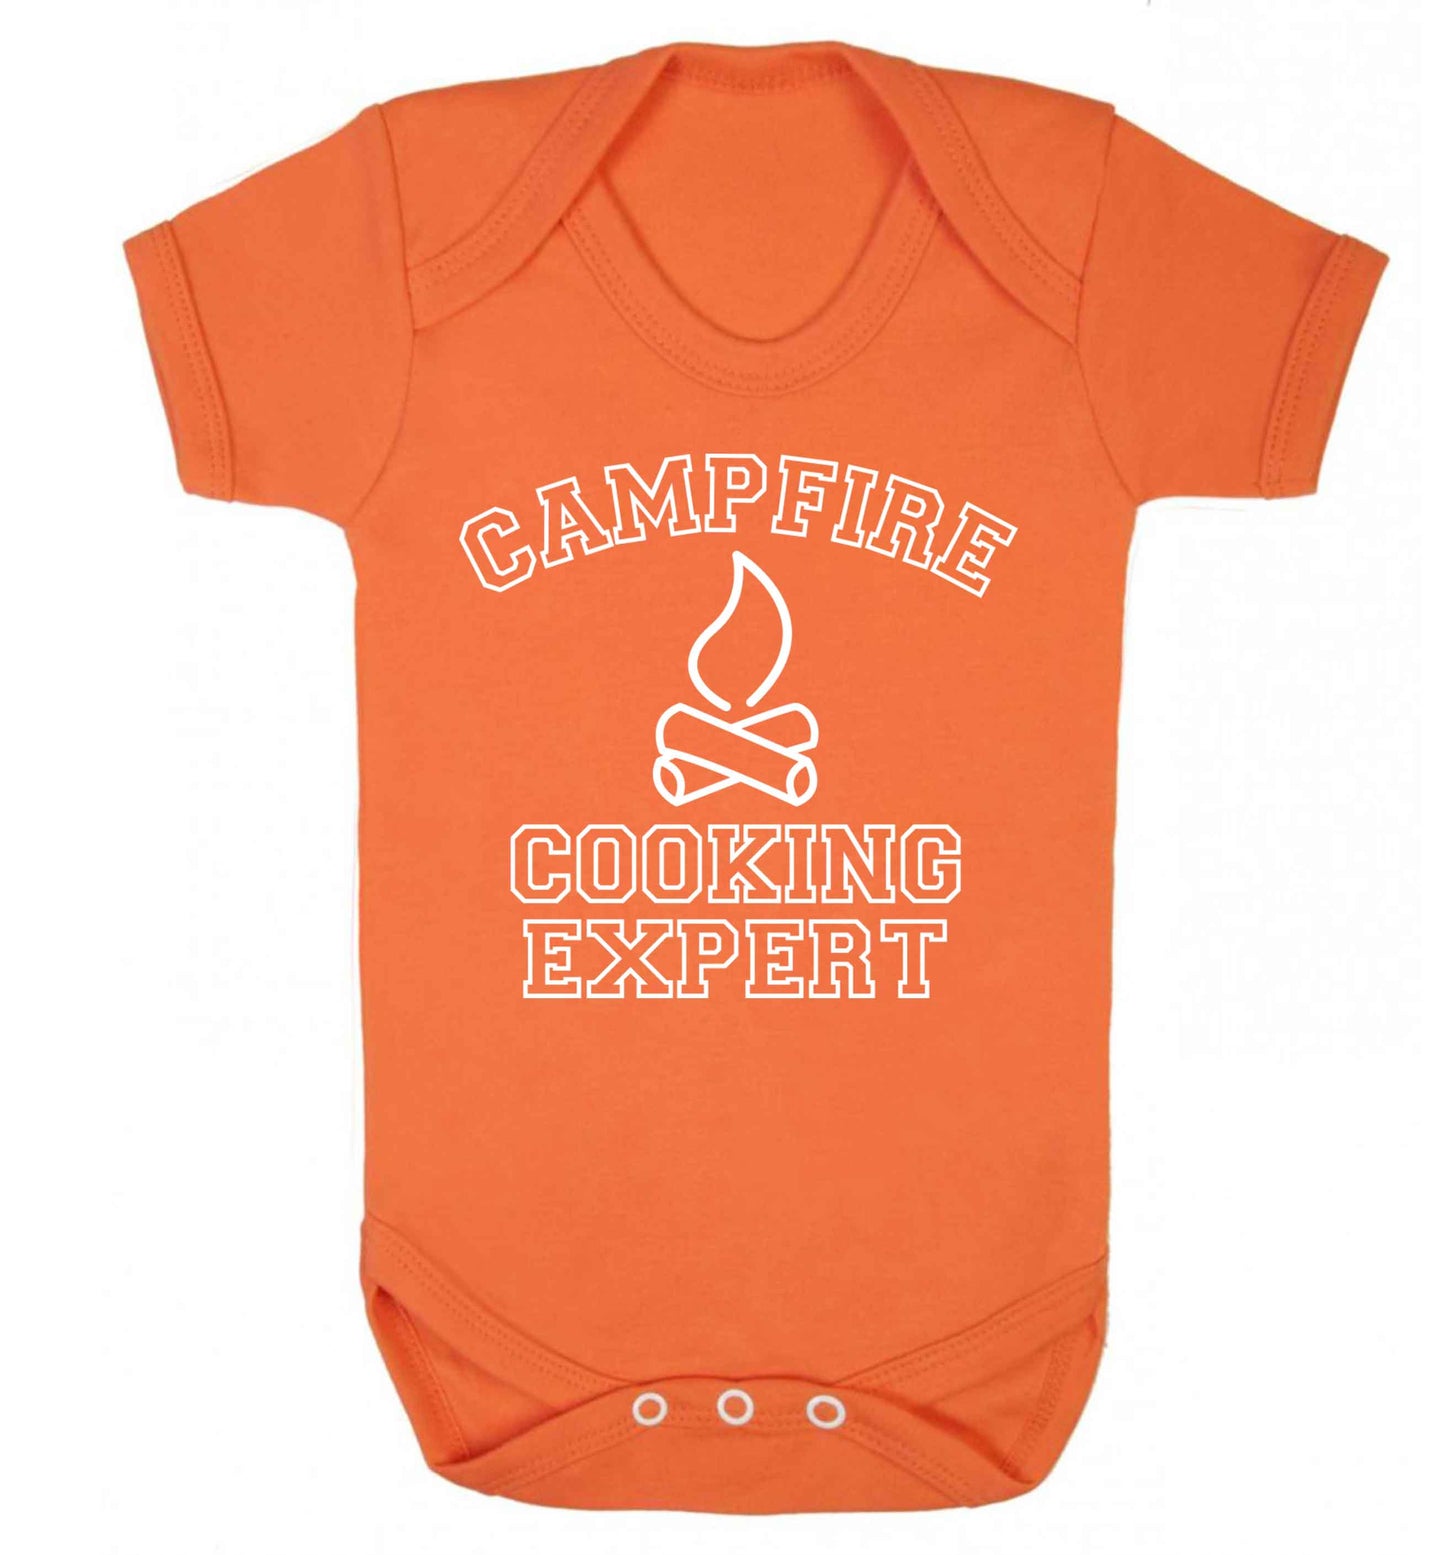 Campfire cooking expert Baby Vest orange 18-24 months